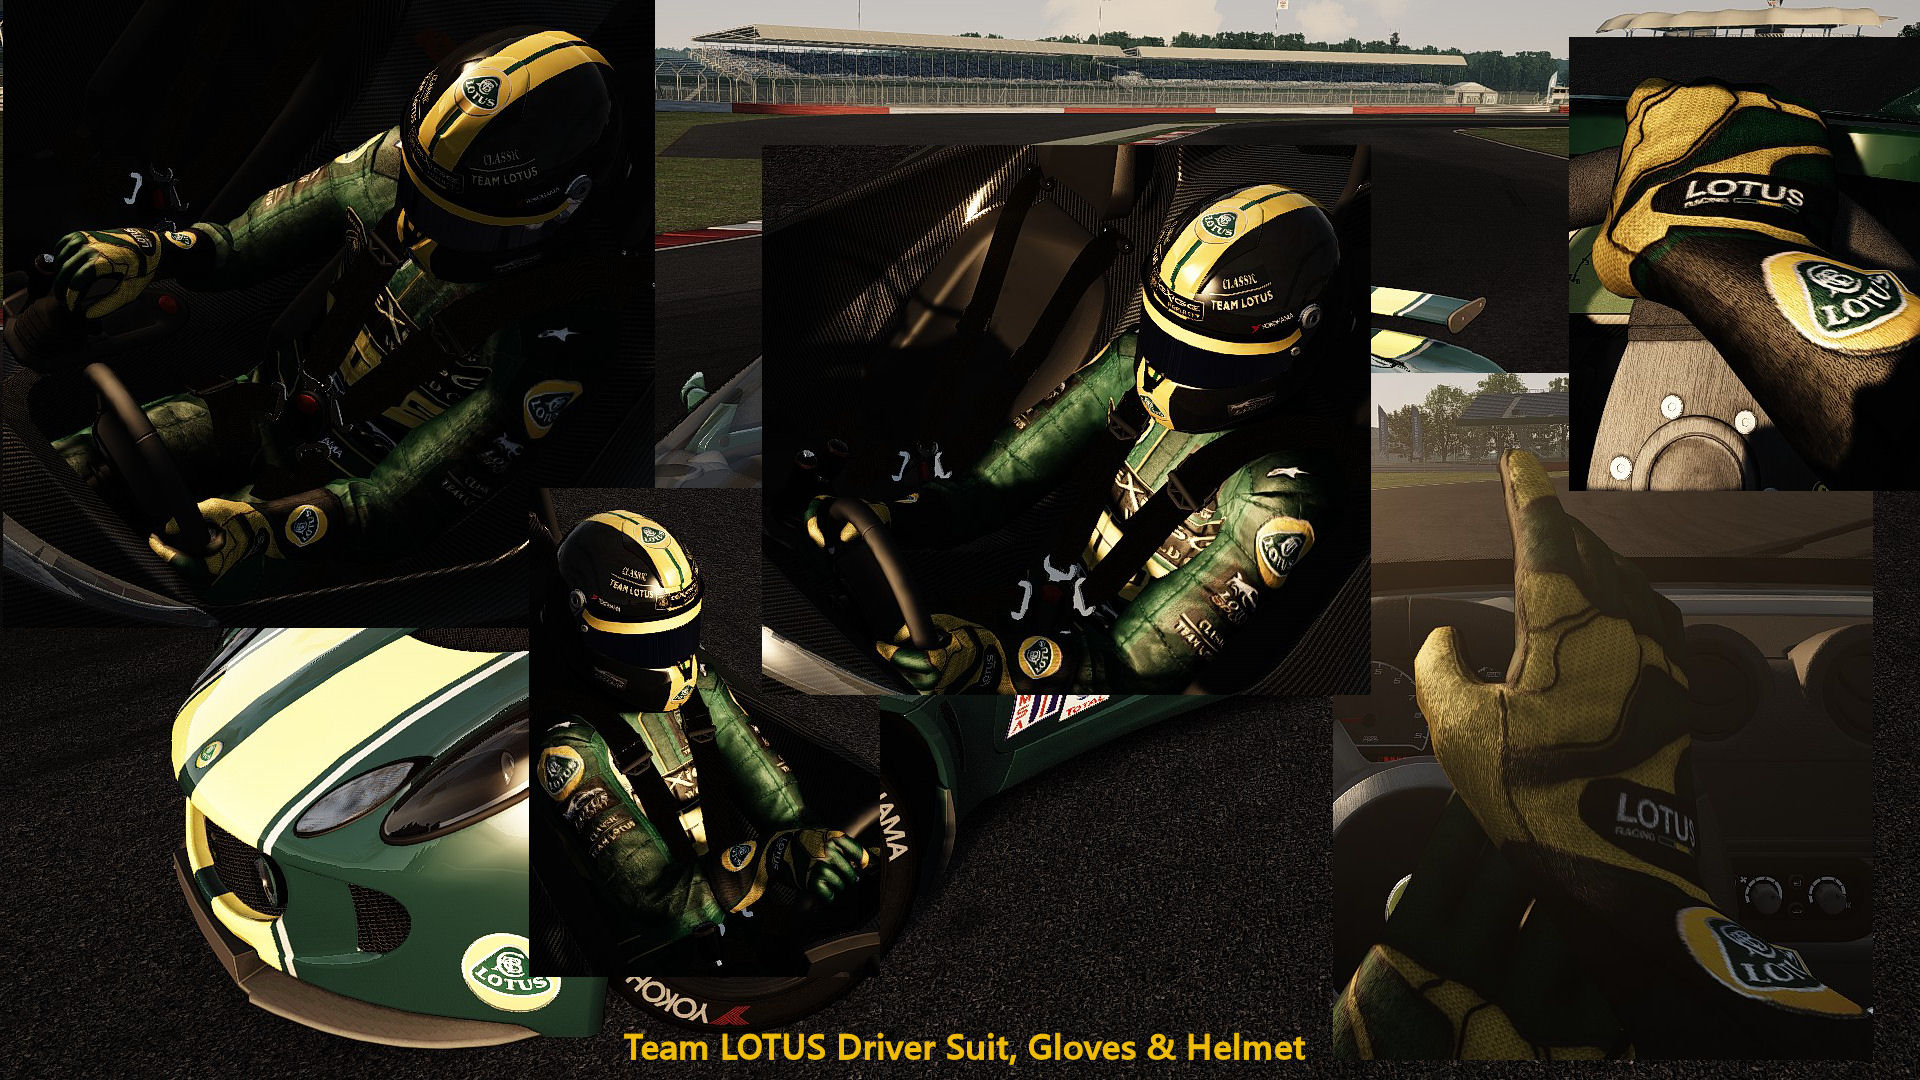 Lotus Driversuit RC1.jpg